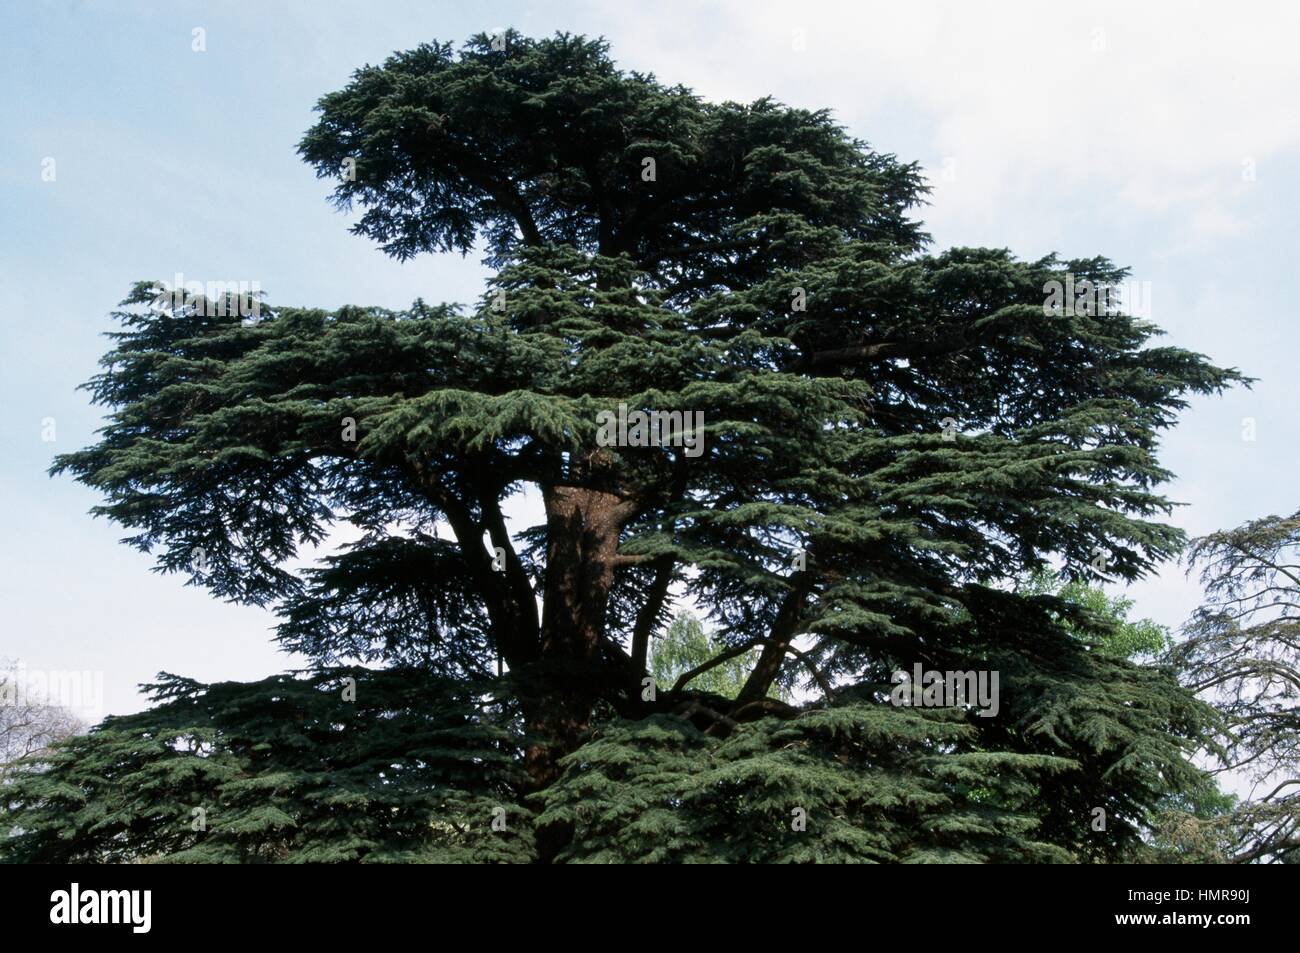 Lebanese Cedar (Cedrus libani), Pinaceae. Stock Photo